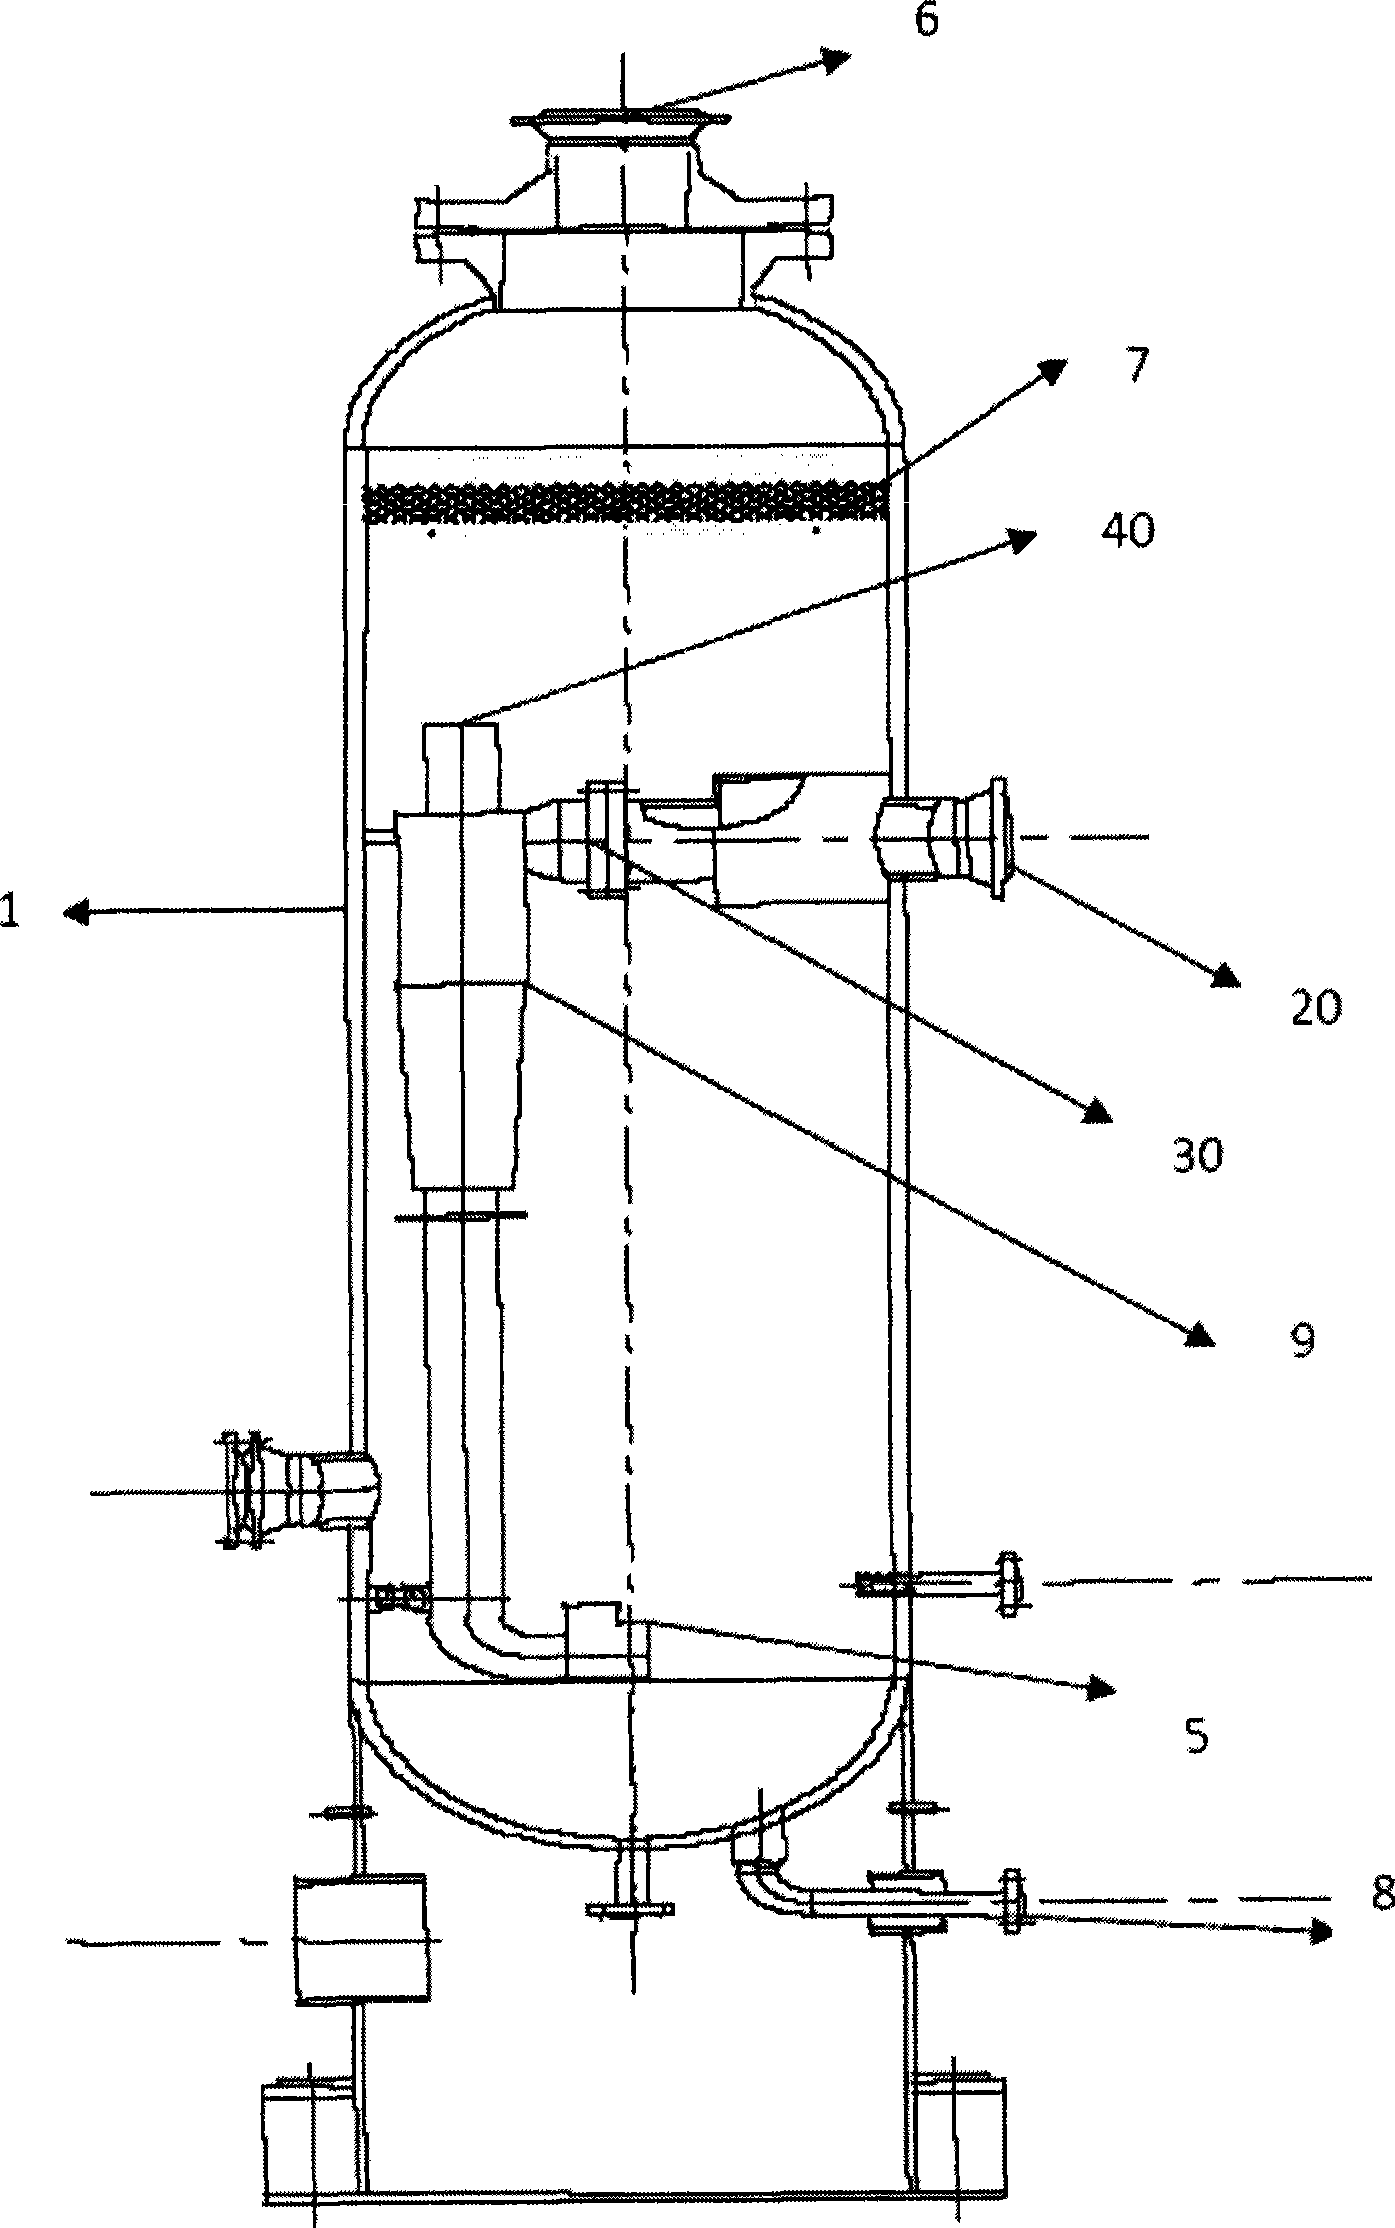 Micro vortex flow tube arrangement method of recycle hydrogen de-hydrocarbon machine